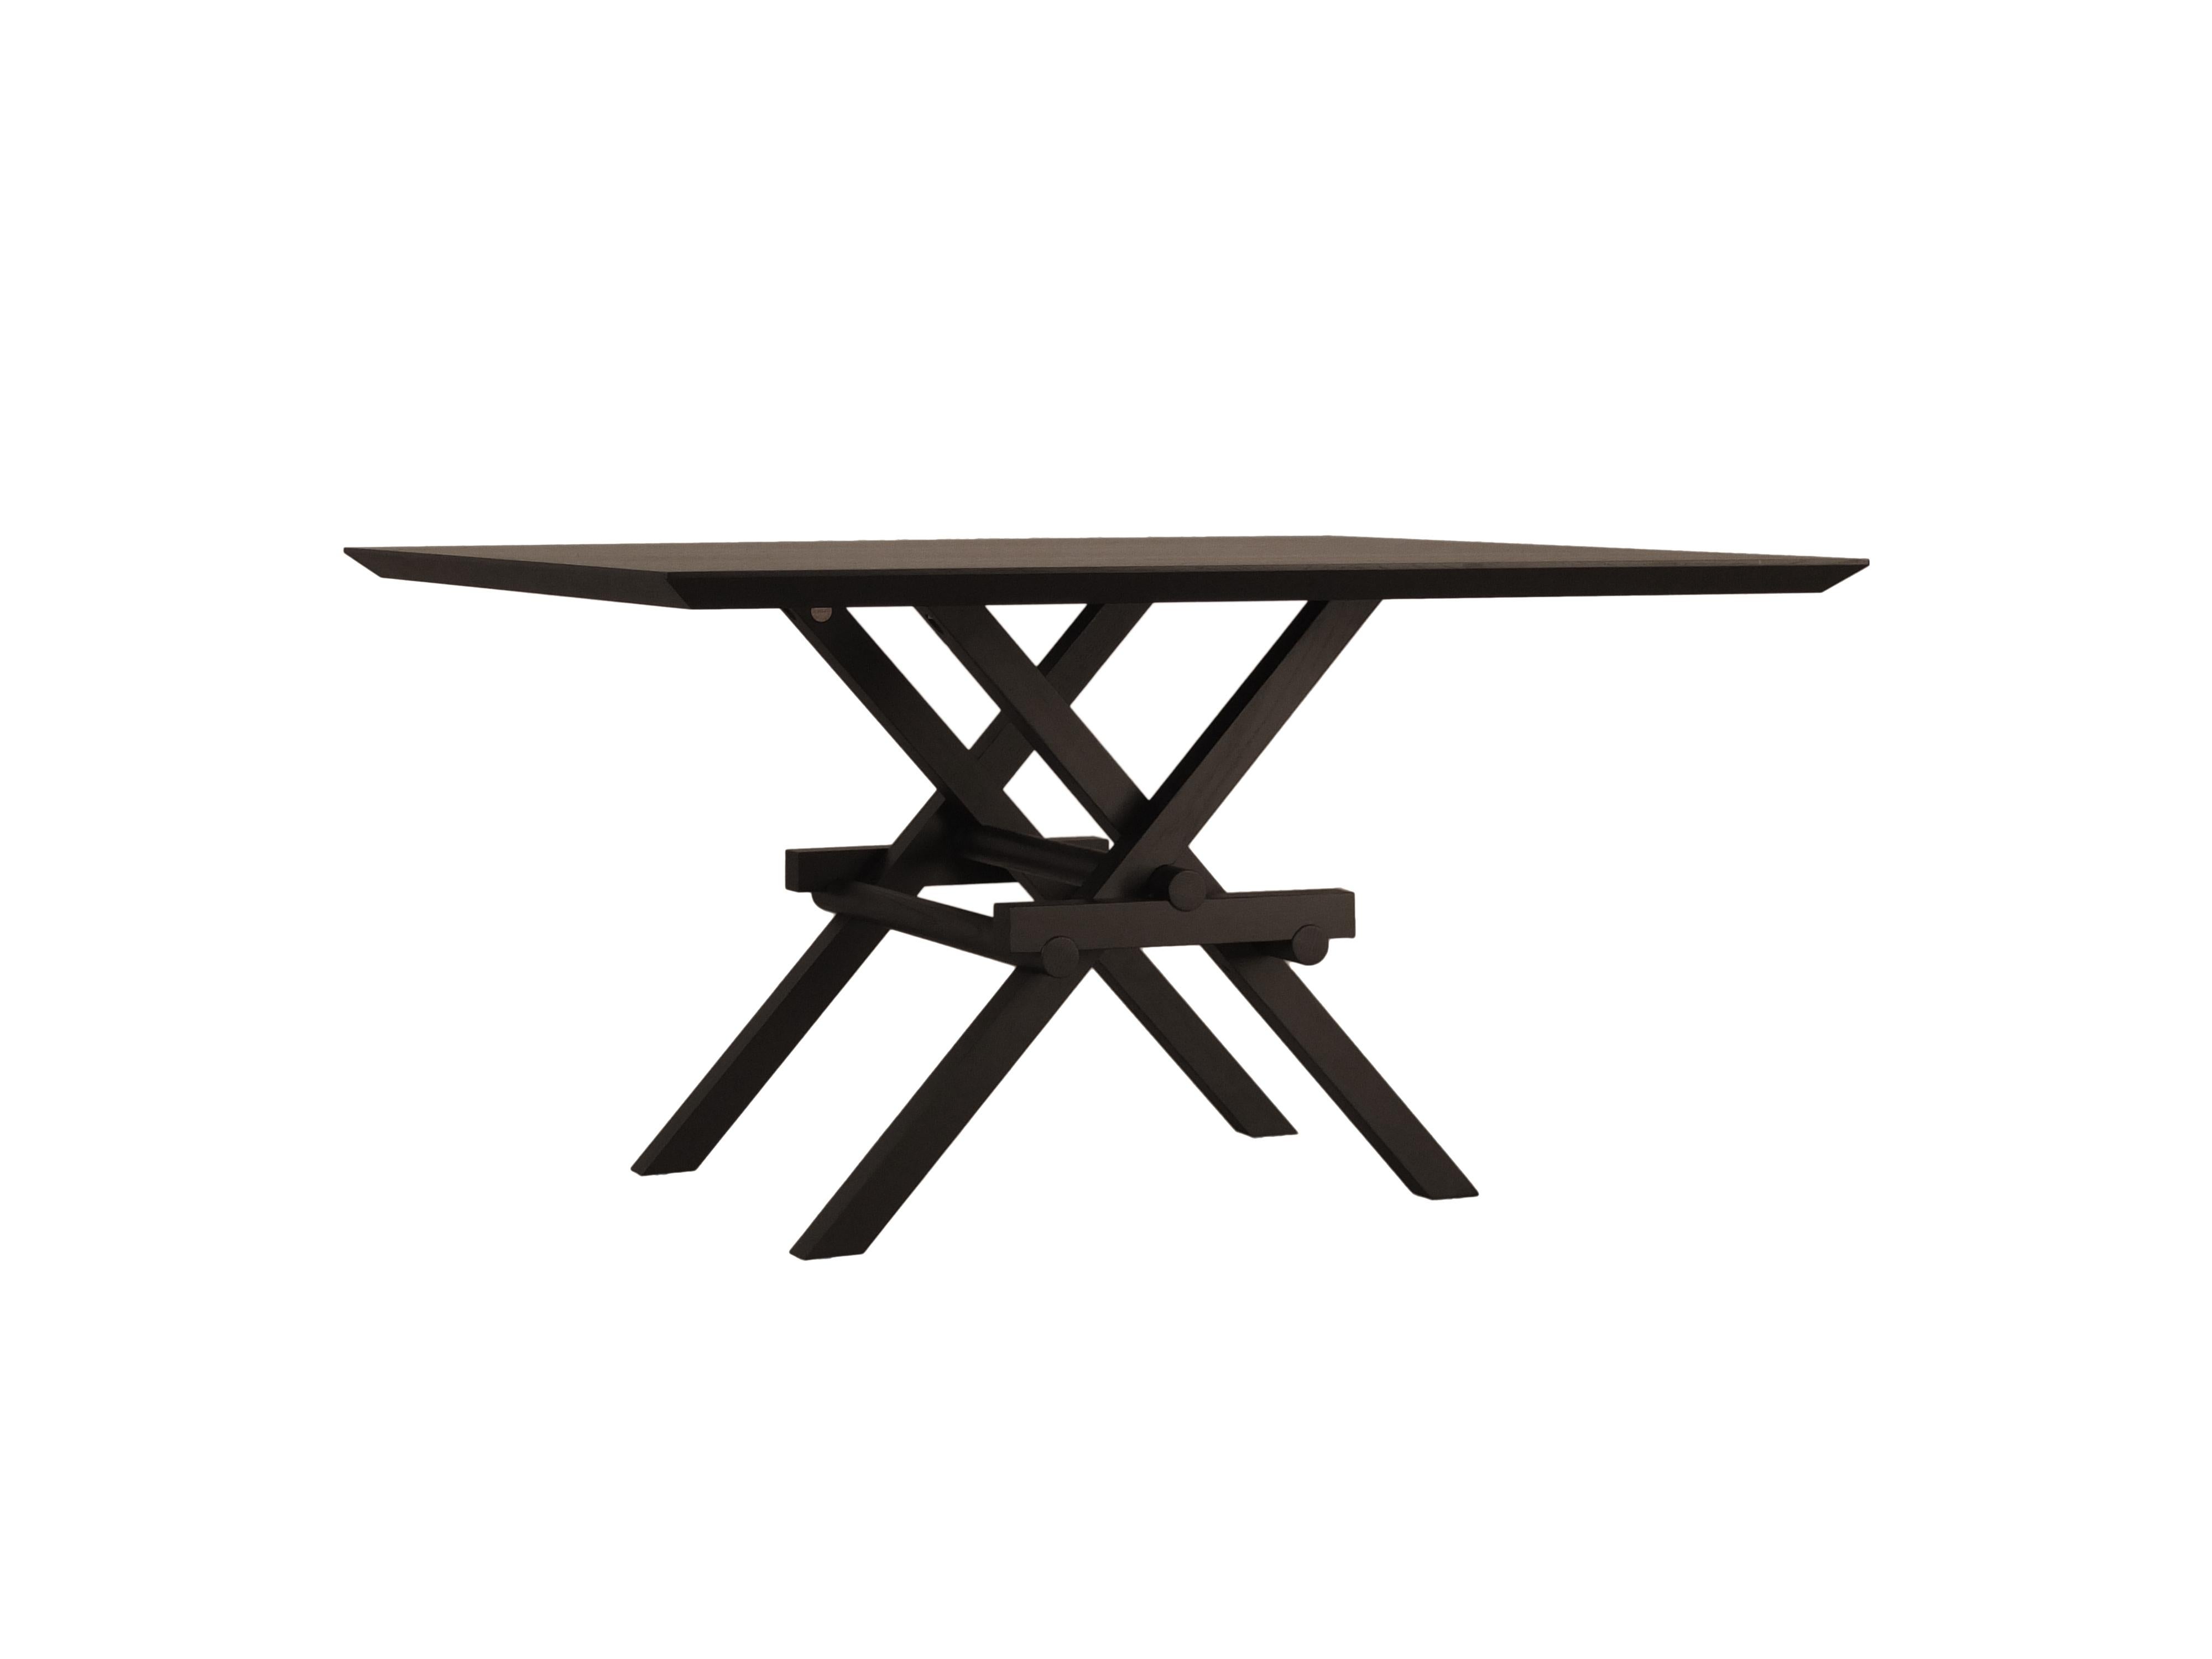 Leonardo Contemporary Table Made of Ashwood with Interlocking Legs 2